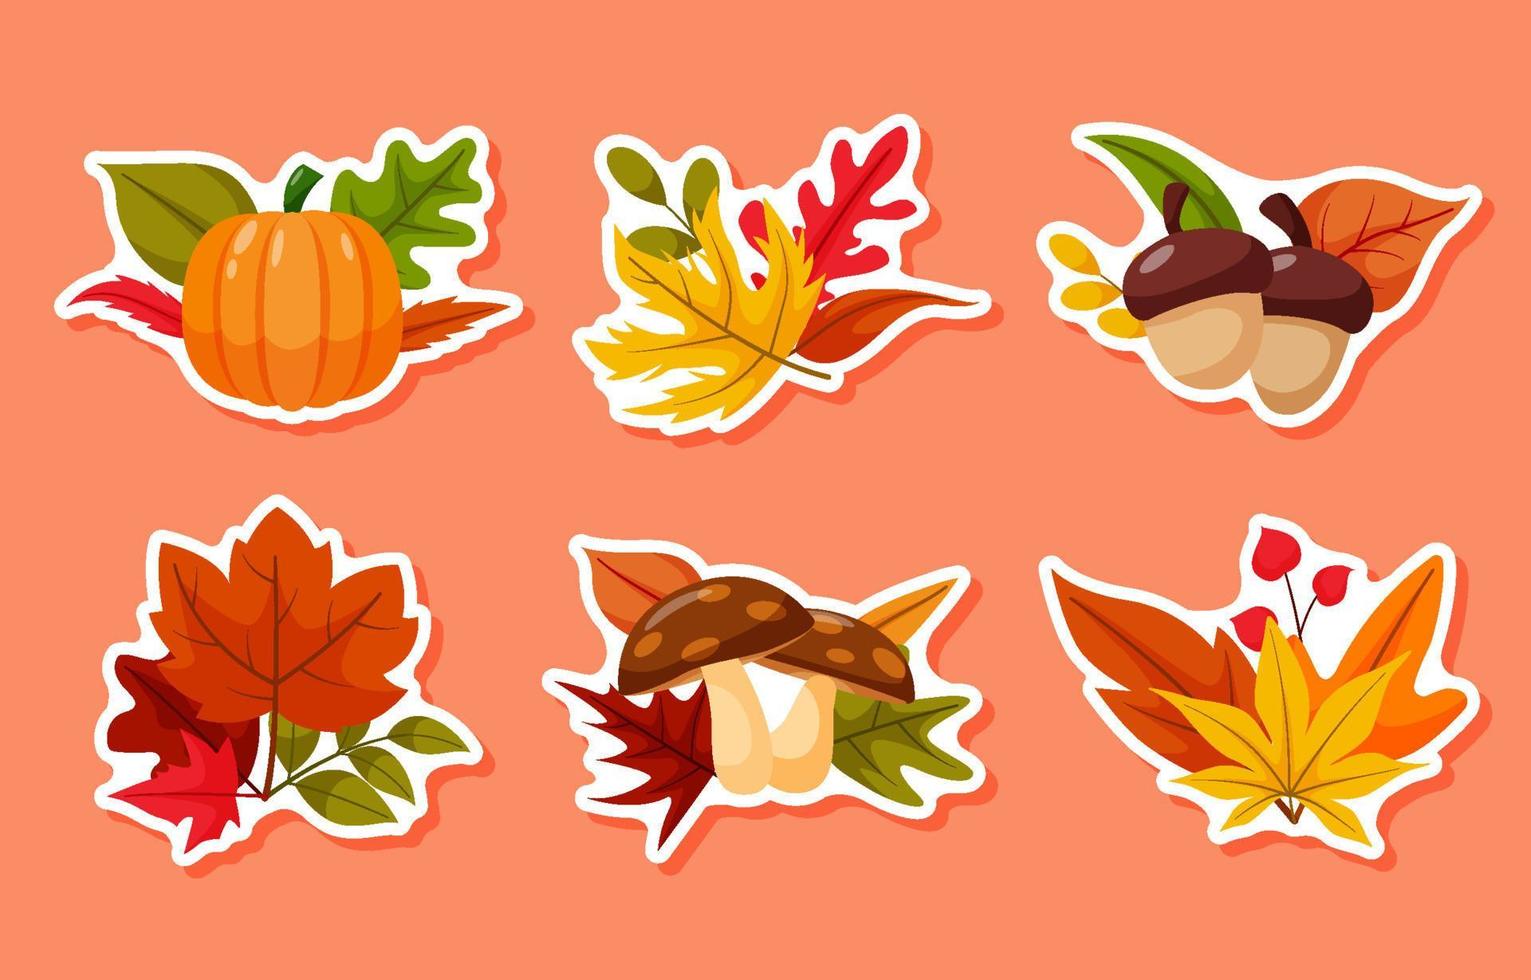 Fall Floral Sticker Set vector